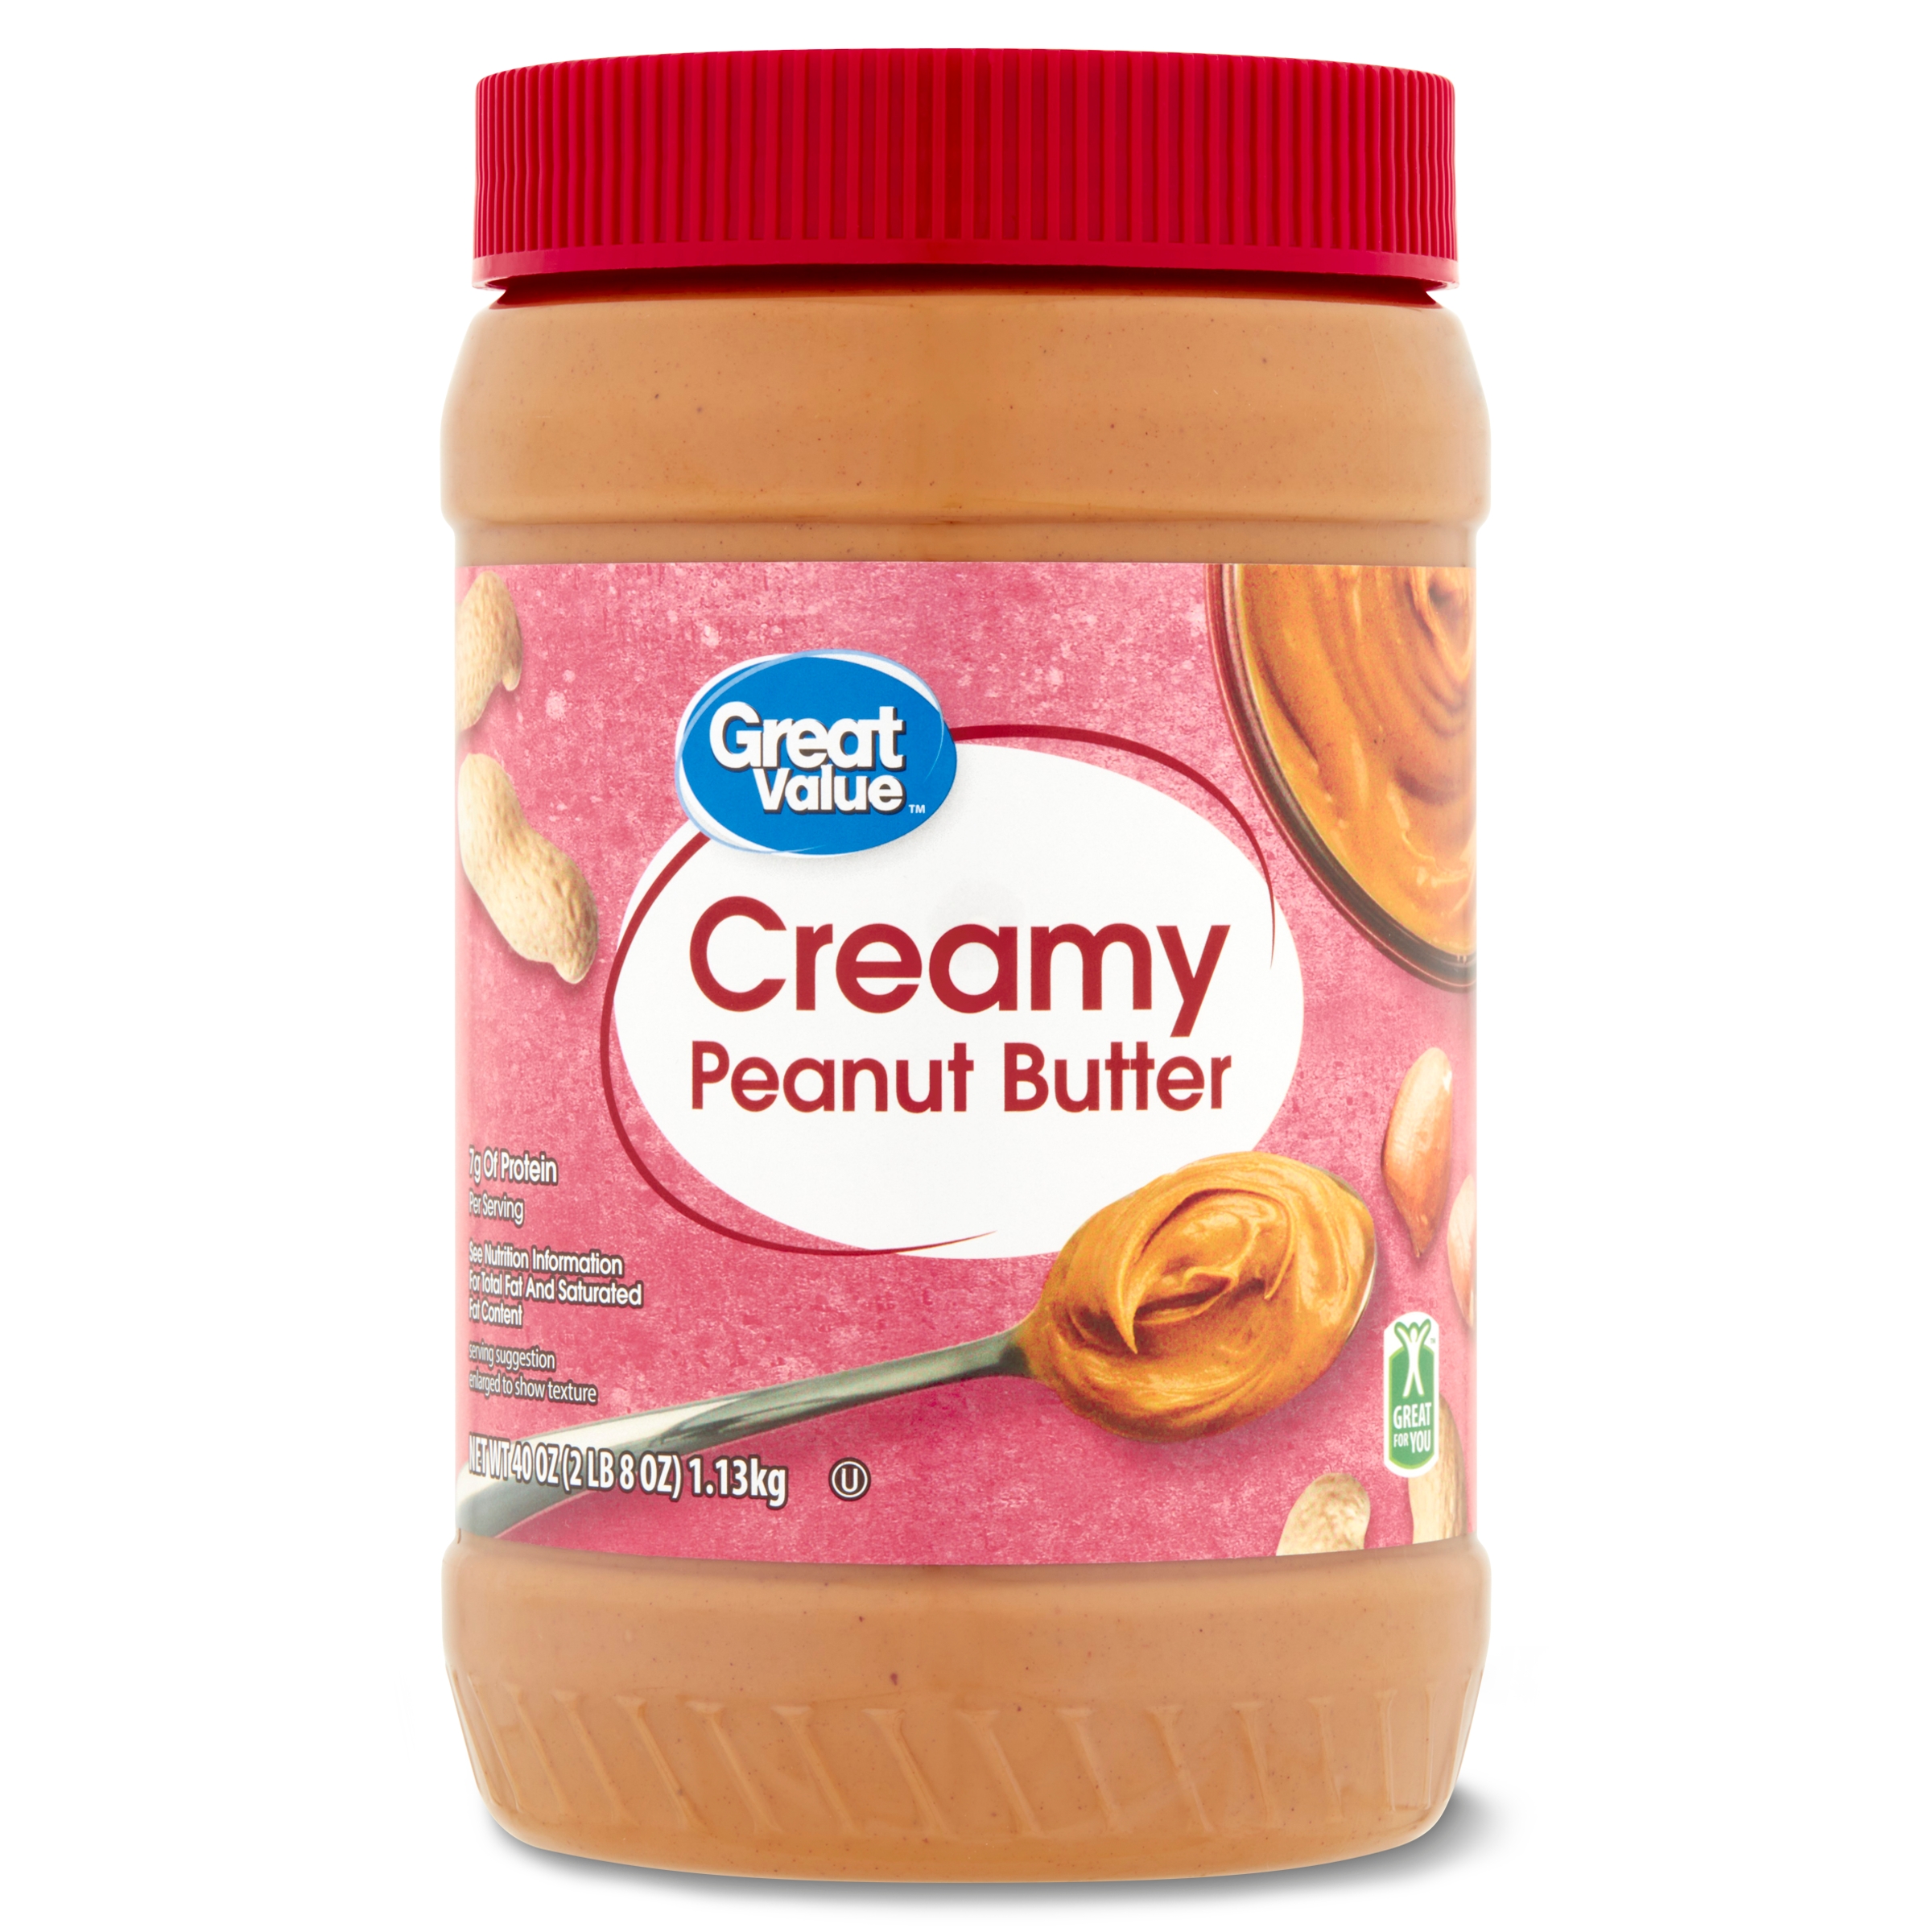 Great Value Creamy Peanut Butter, 40 oz Jar - image 1 of 7